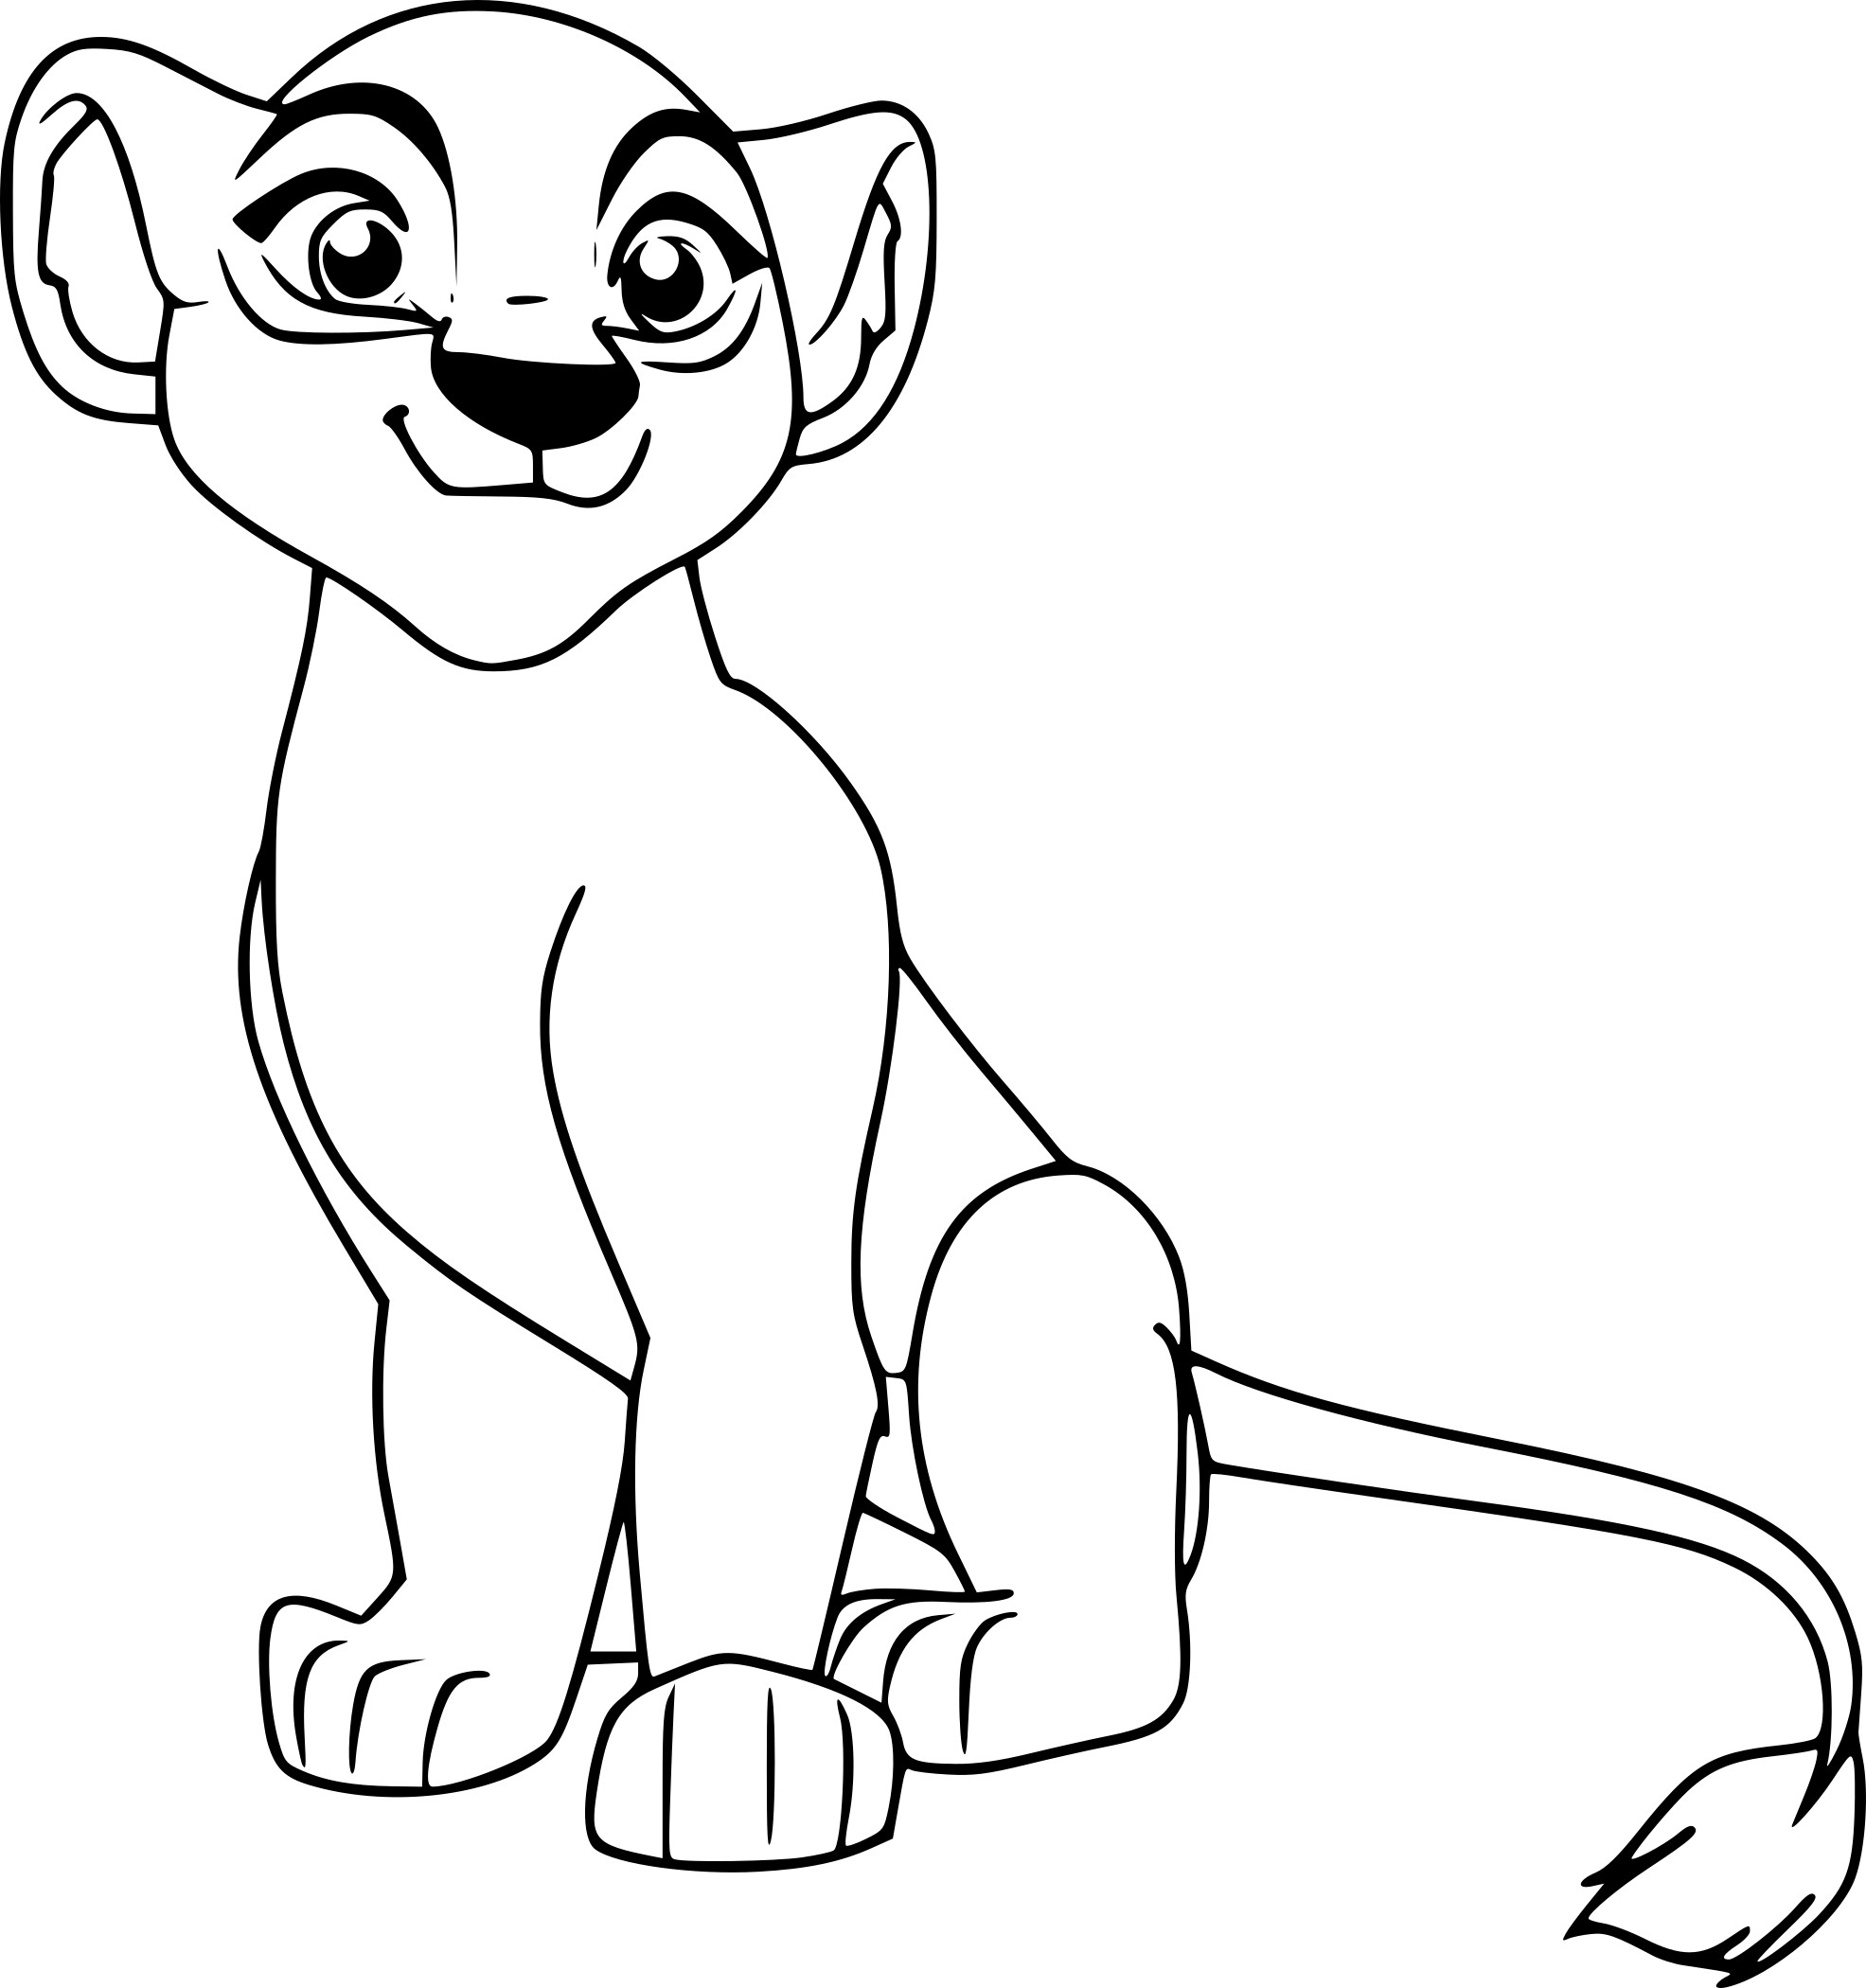 Kiara Guard Of The Lion King coloring page